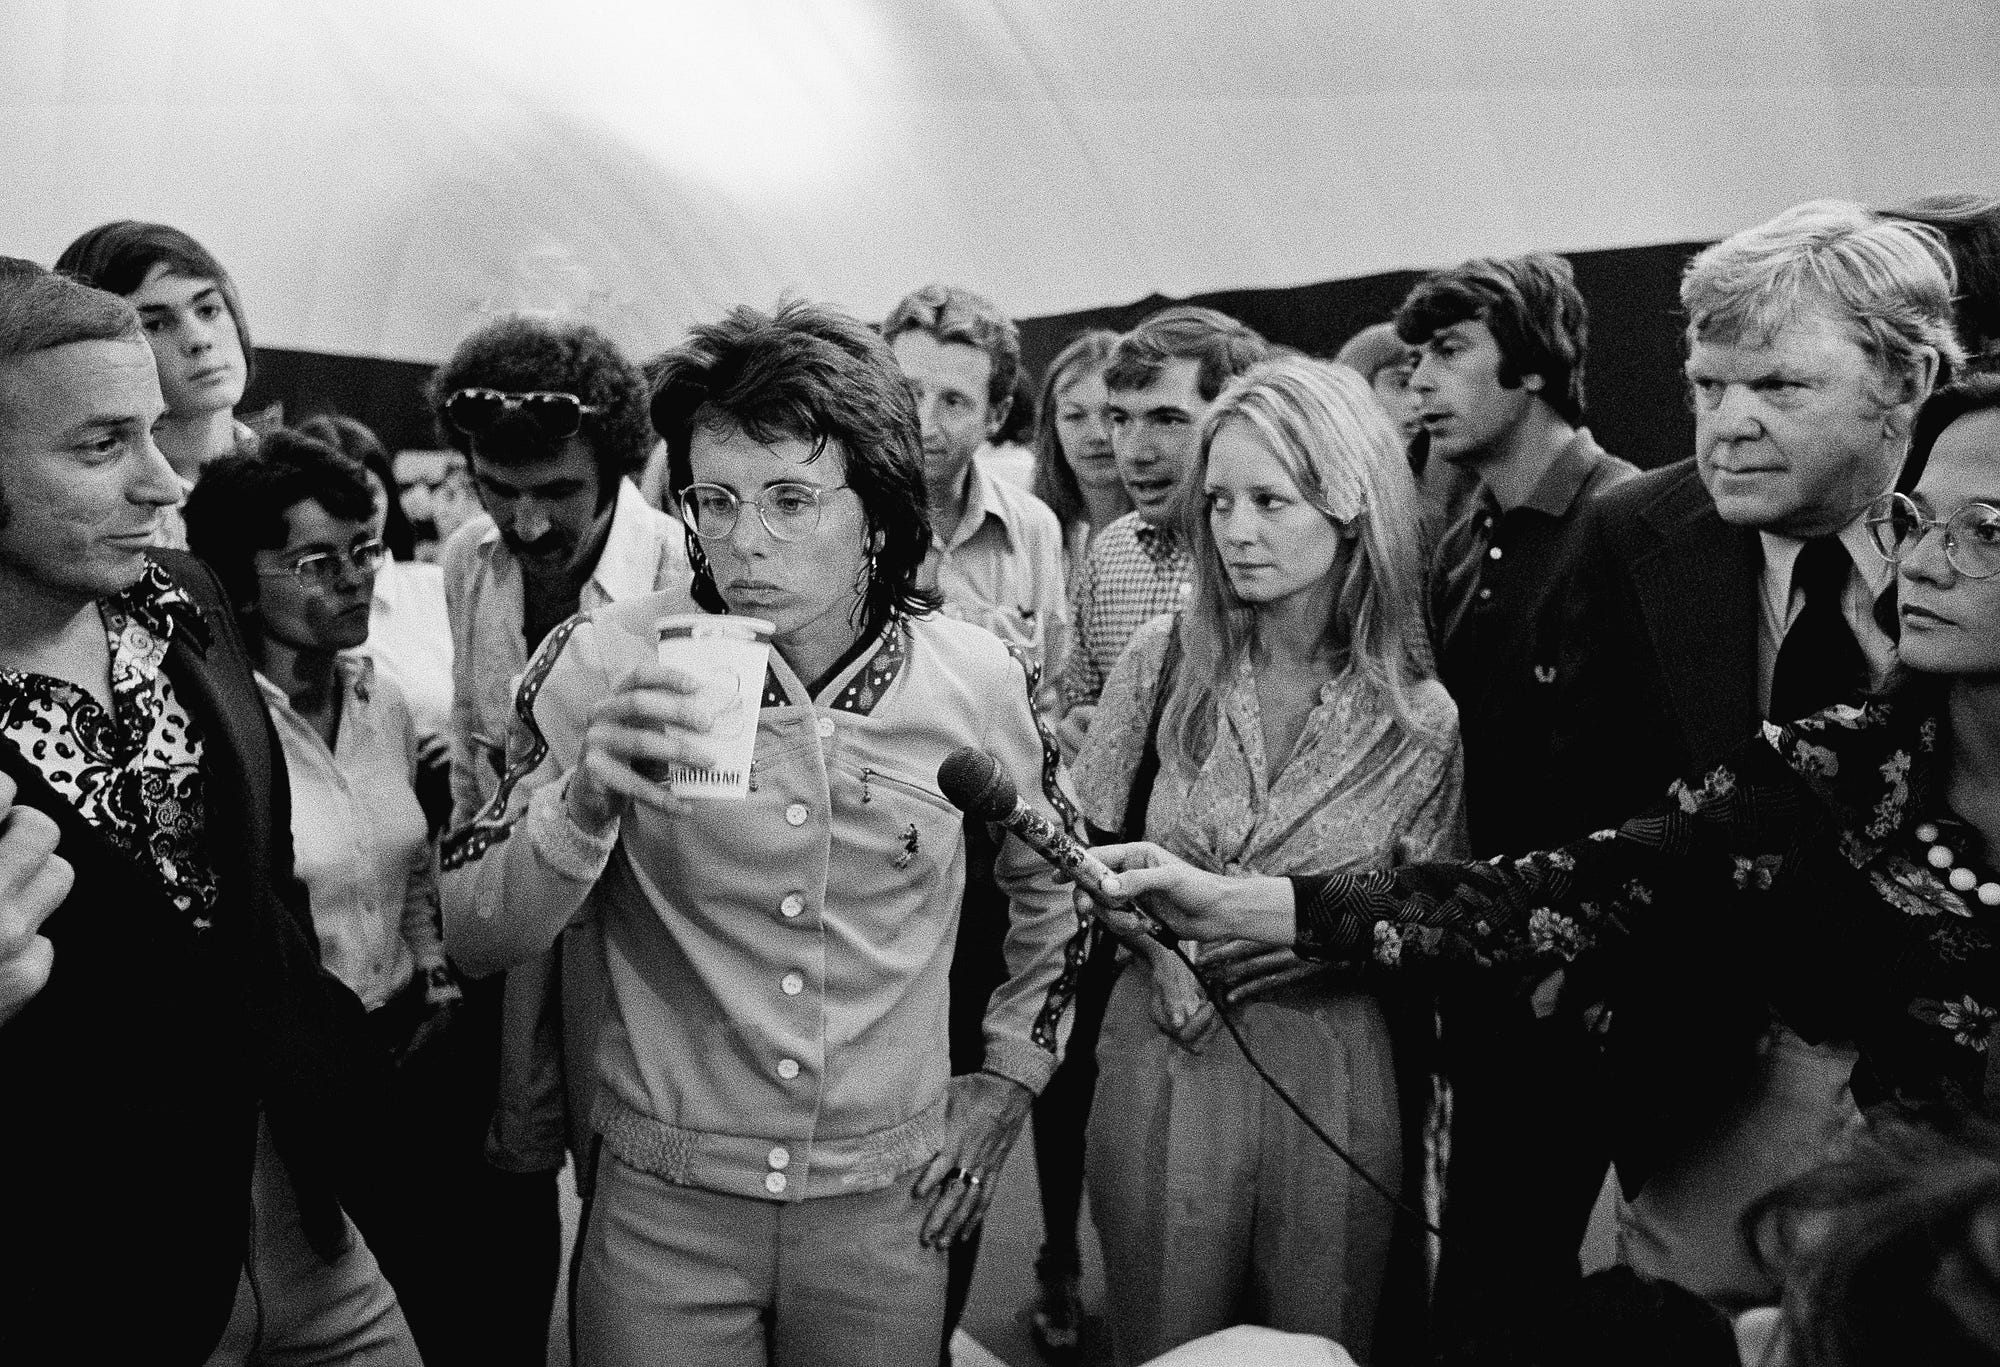 Billie Jean King triumphs in “Battle of the Sexes, September 20, 1973